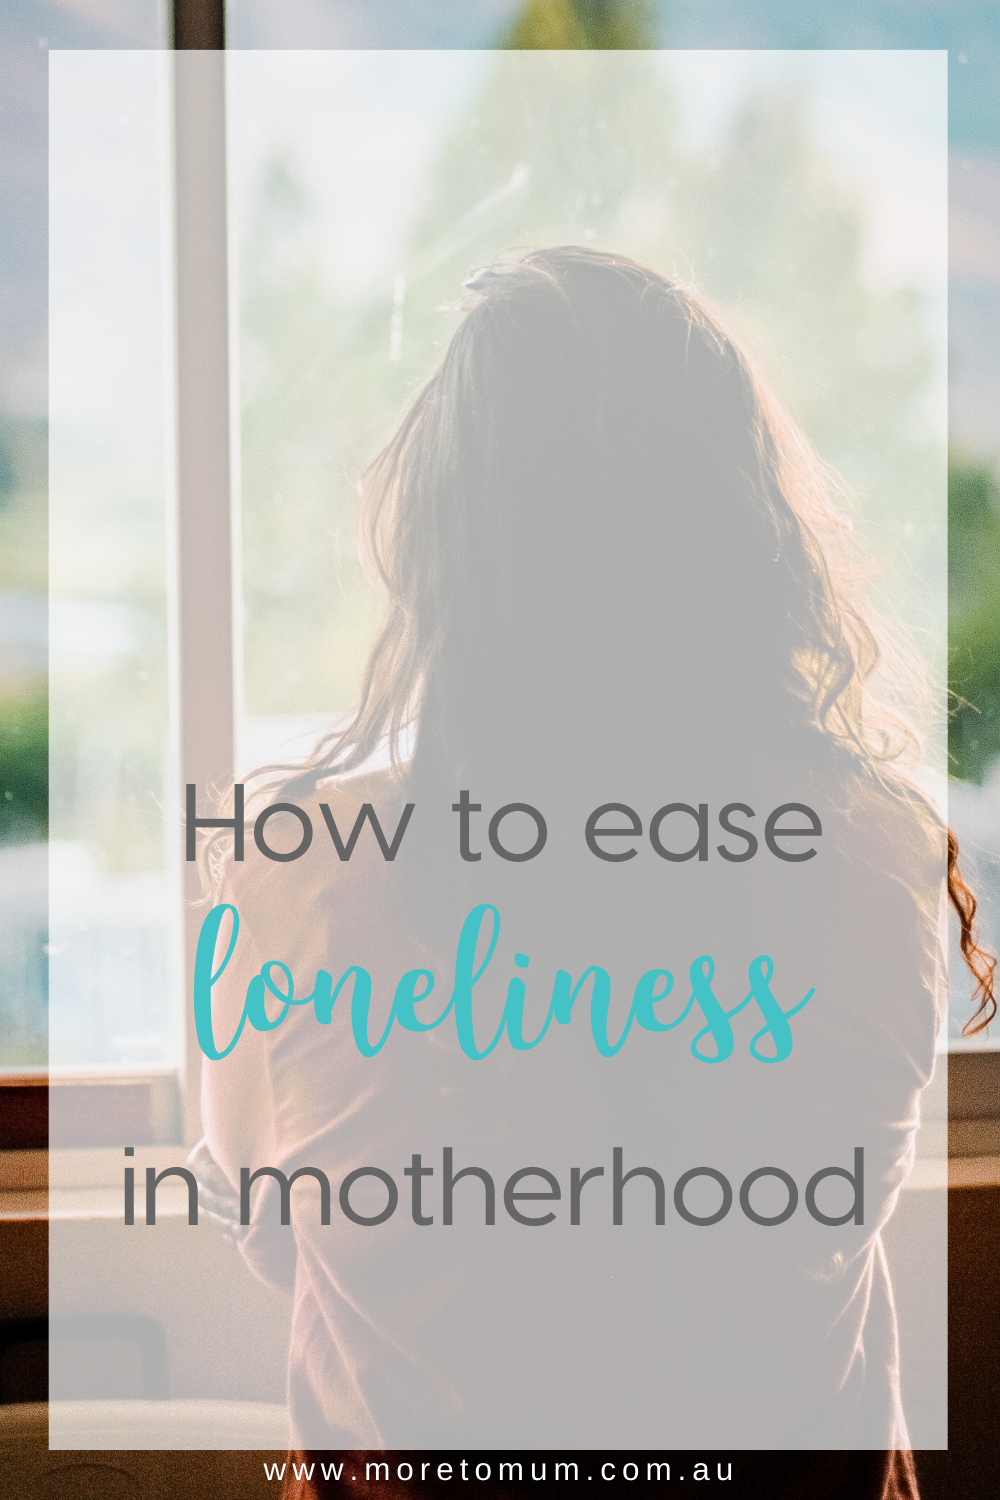 www.moretomum.com.au loneliness in motherhood